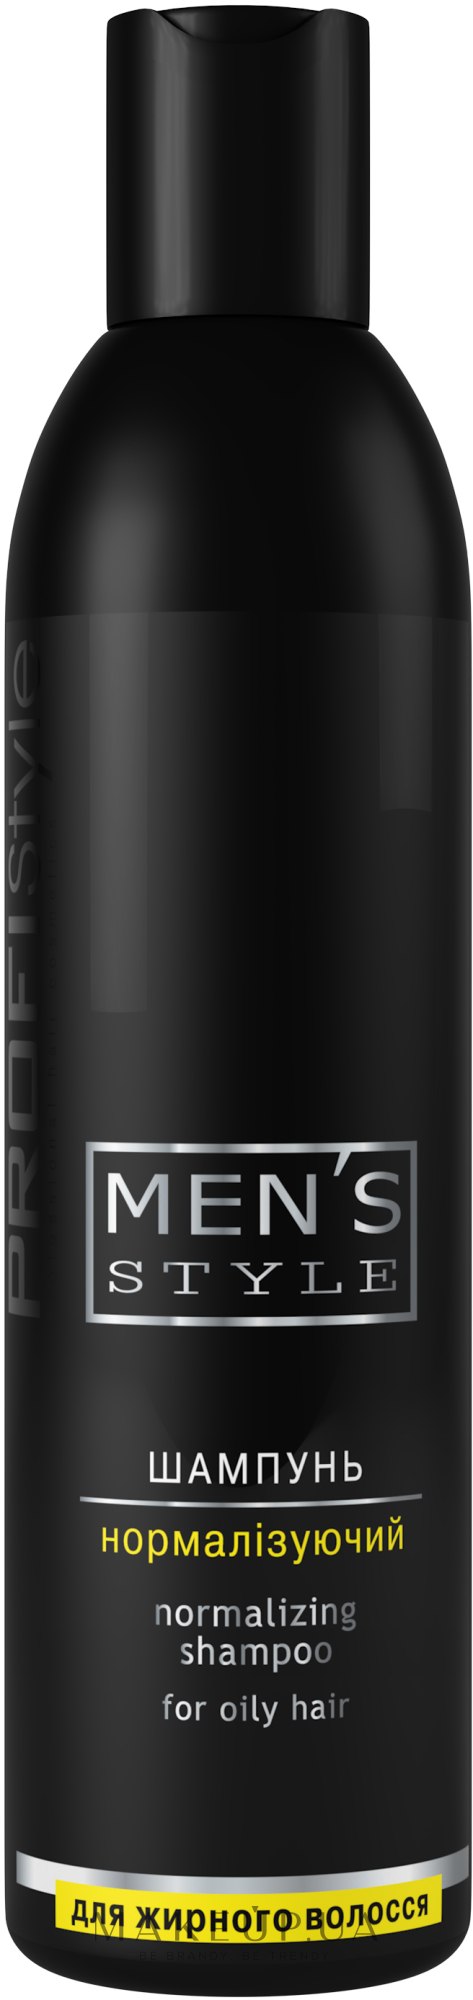 Шампунь нормализующий для мужчин - Profi Style Men's Style Normalizing Shampoo  — фото 250ml